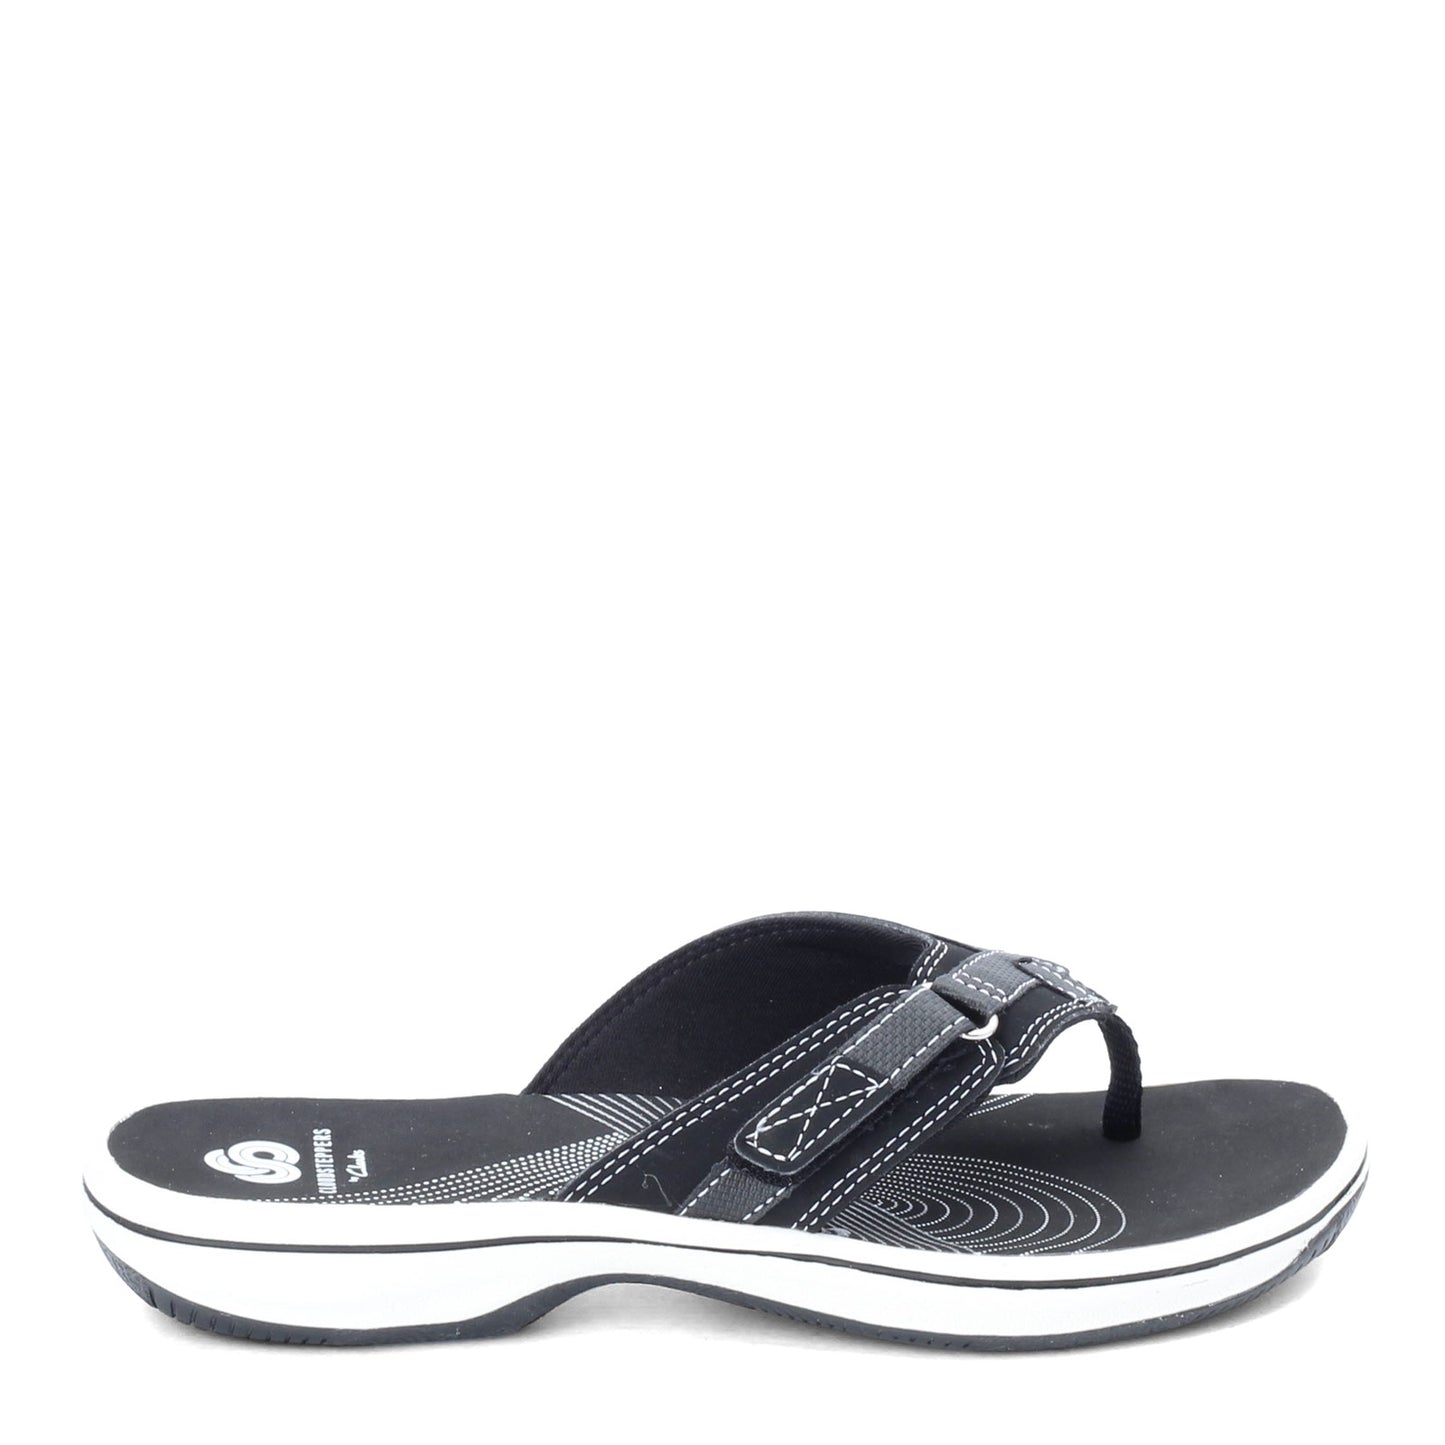 Peltz Shoes  Women's Clarks Breeze Sea Sandal BLACK 26125505